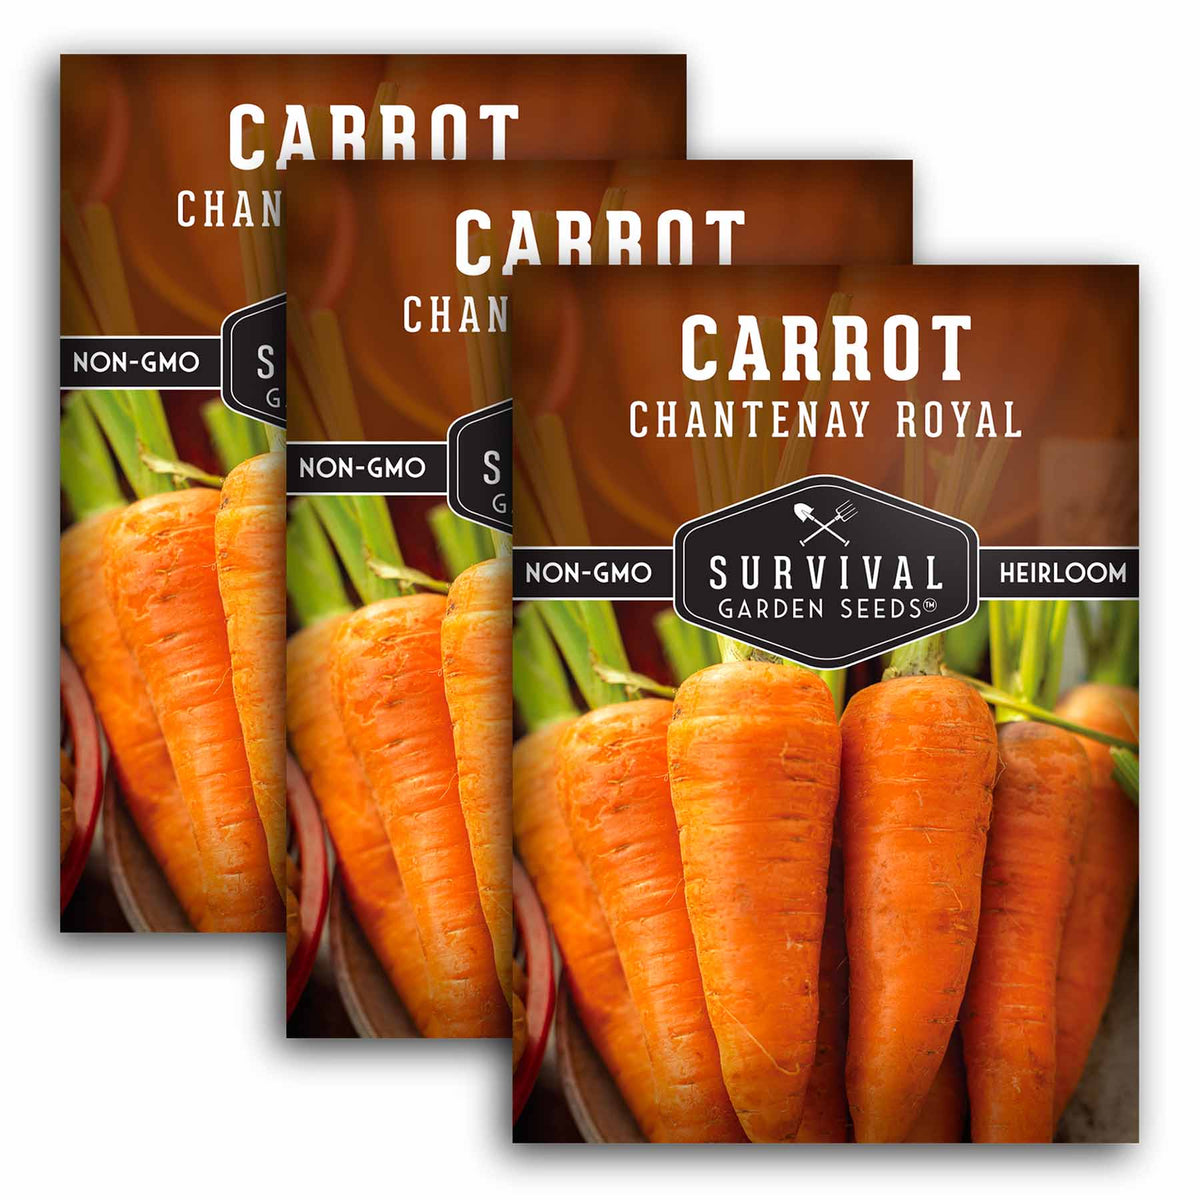 3 Packets of Chantenay Royal Carrot seeds